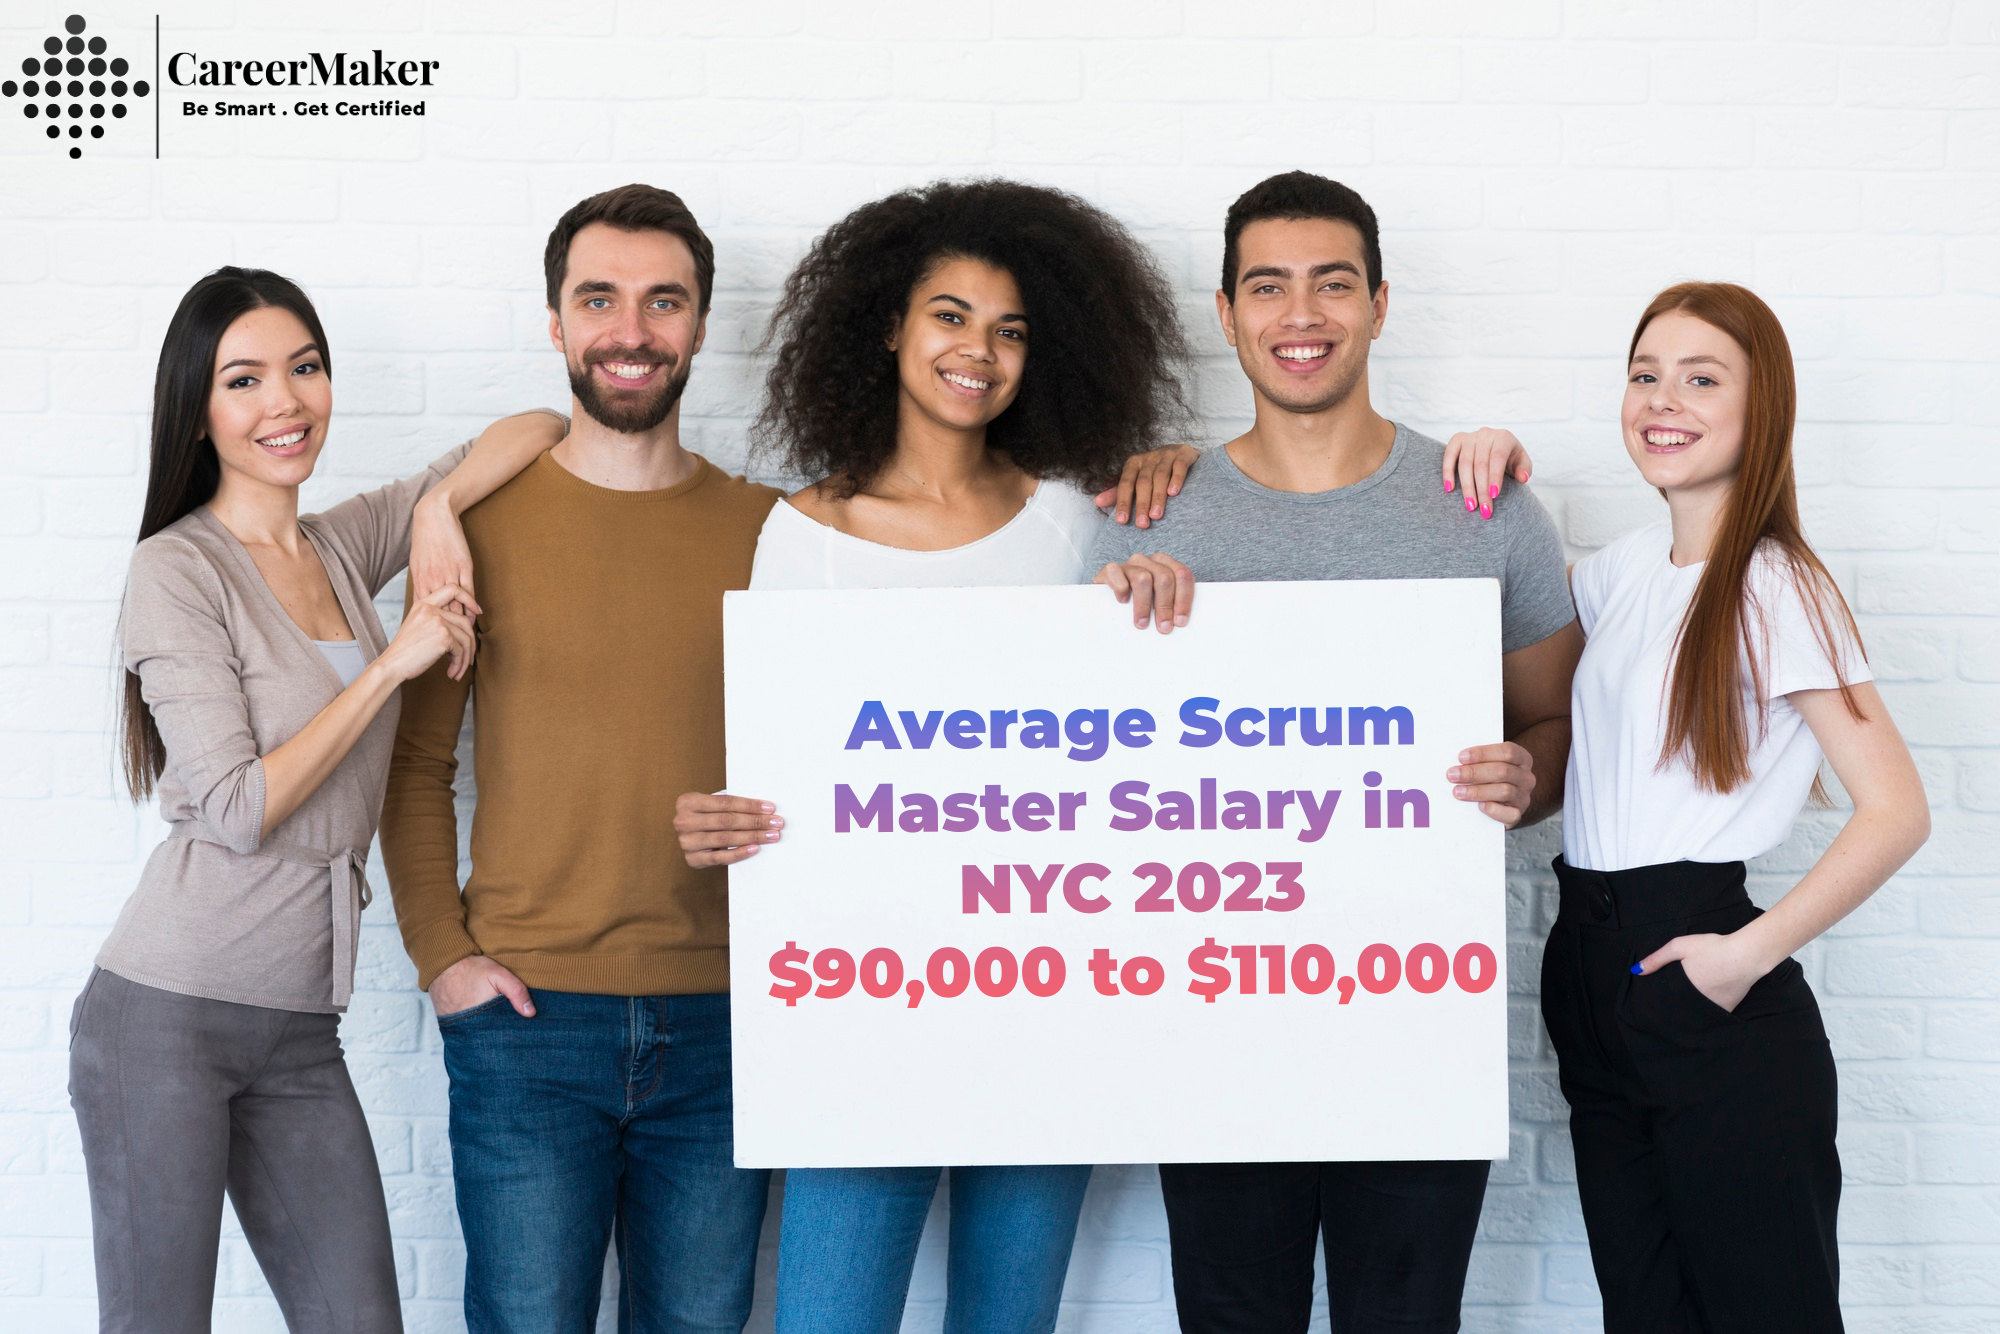 Average Scrum Master Salary in NYC 2023